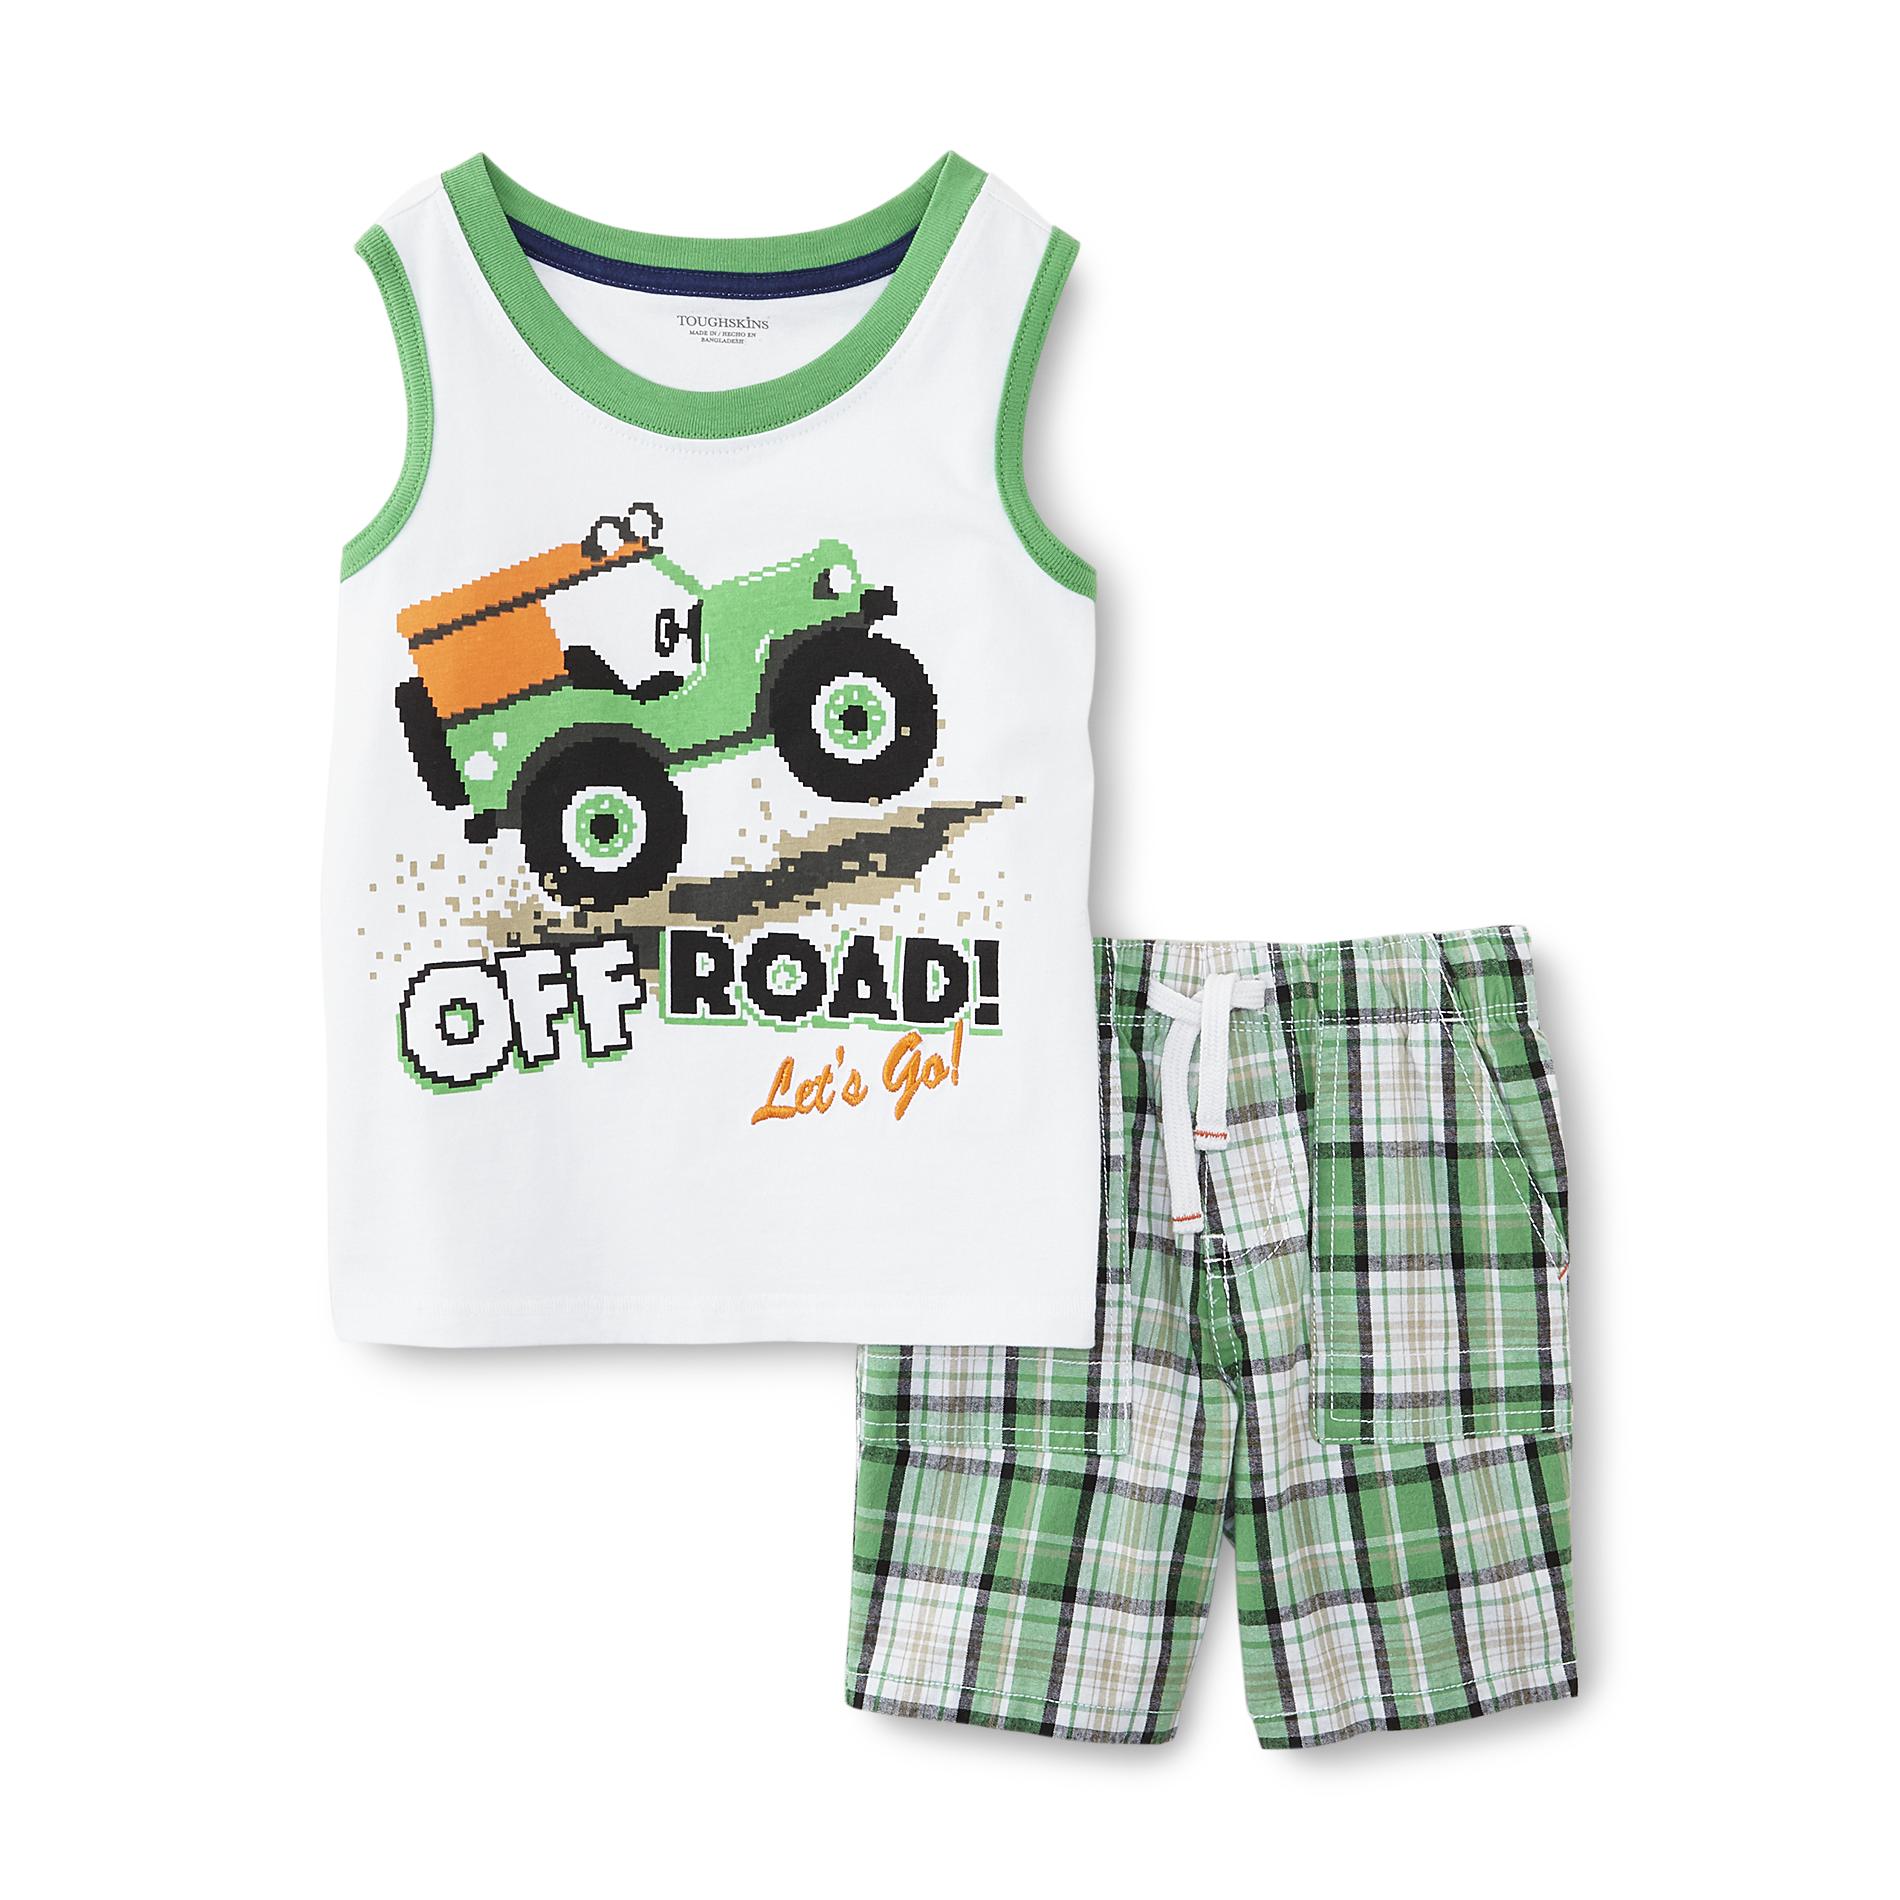 Toughskins Infant & Toddler Boy's Sleeveless T-Shirt & Shorts - Plaid